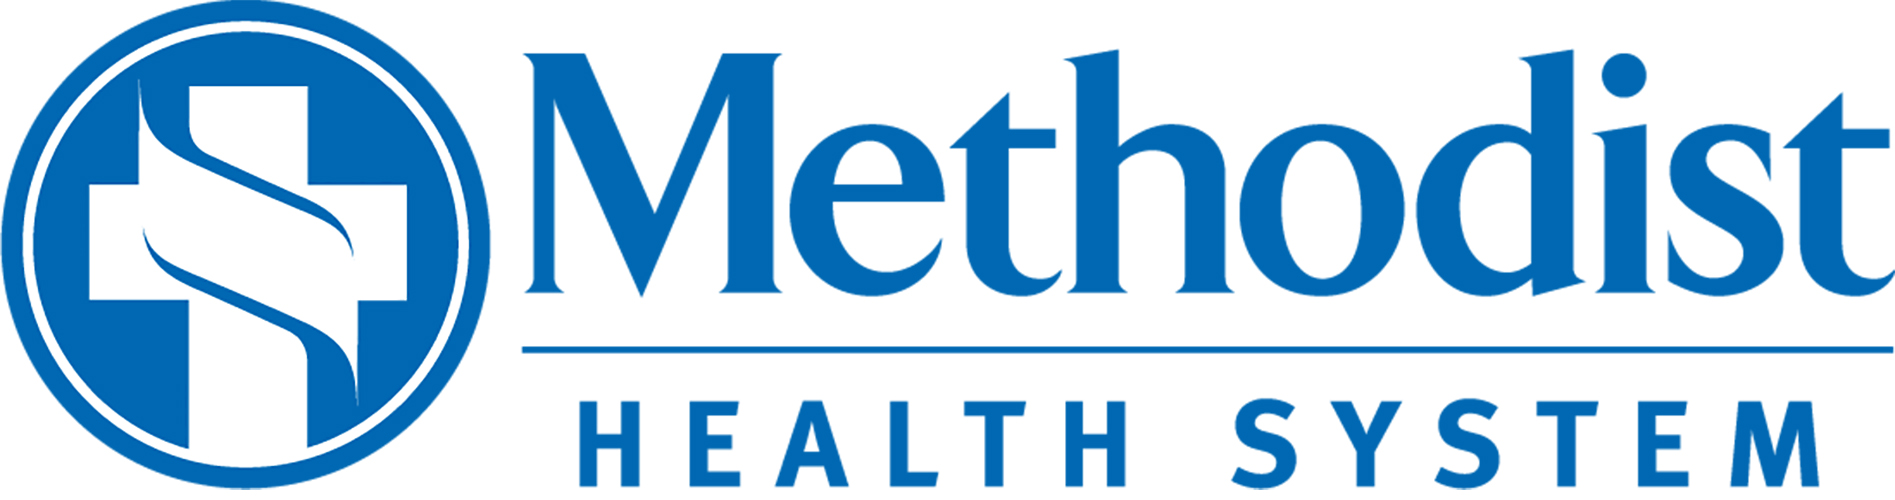 900 Methodist Corporate logo